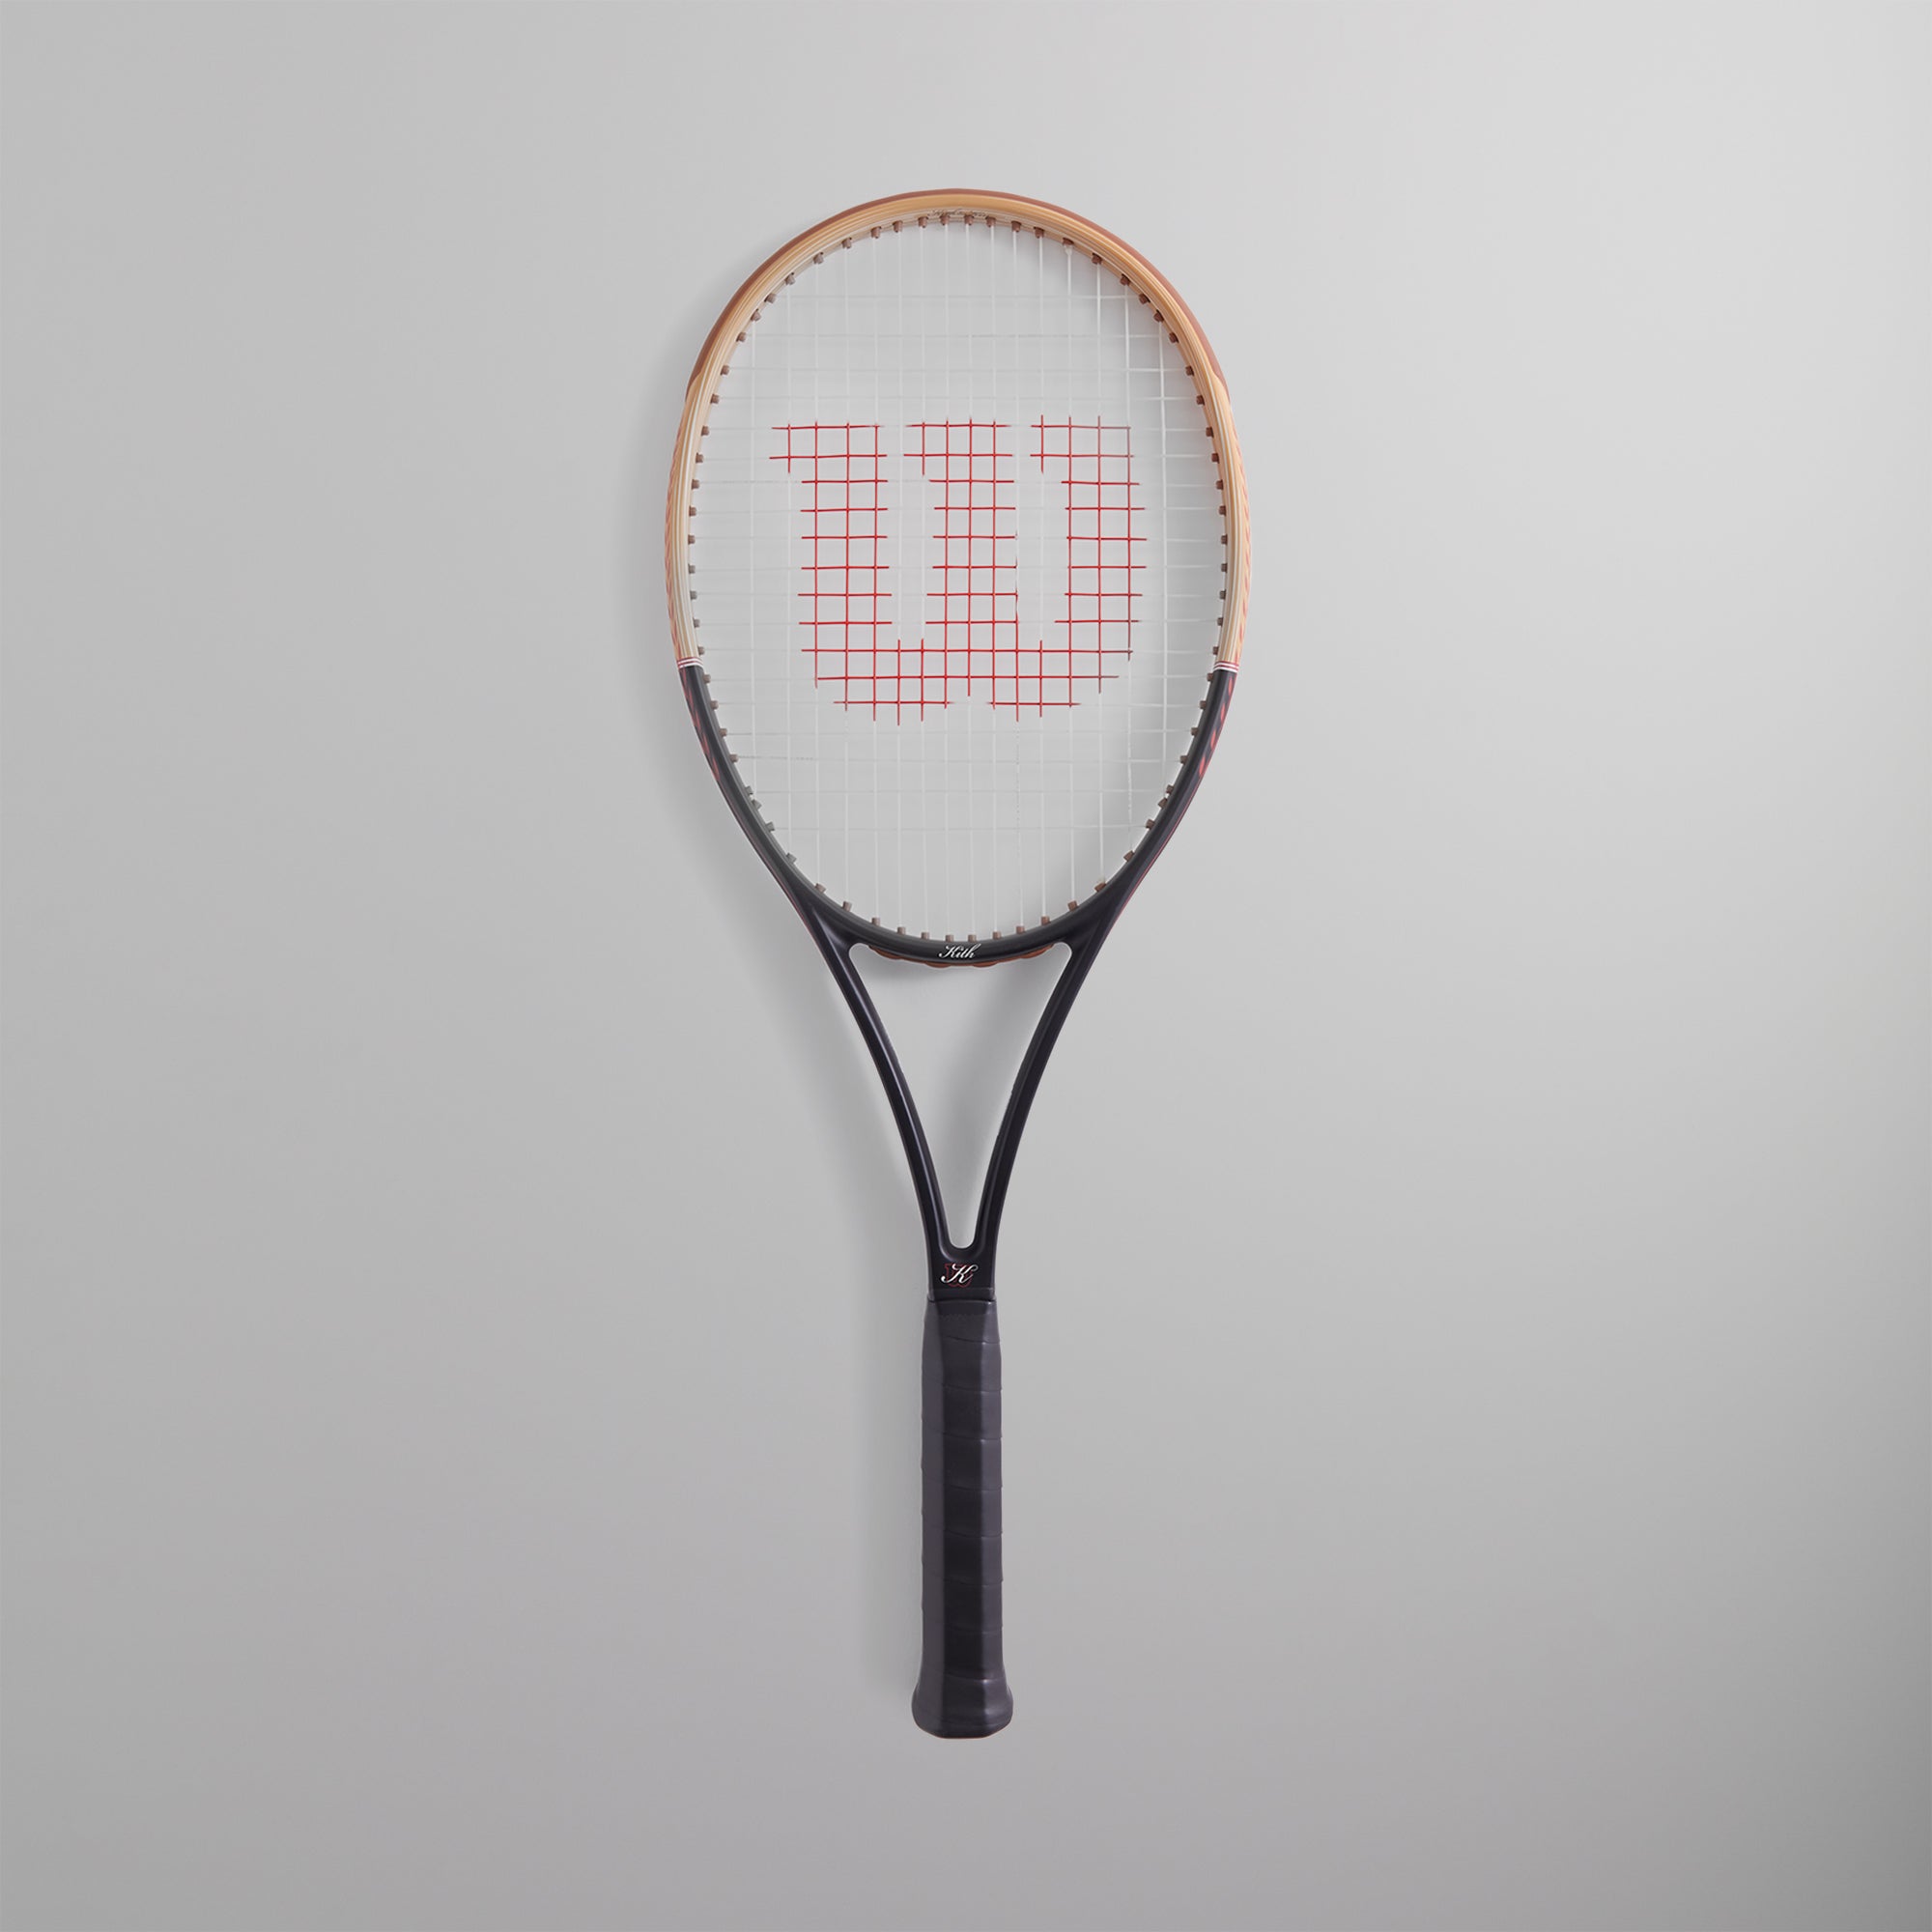 Kith for Wilson Tennis Racket Blade98 